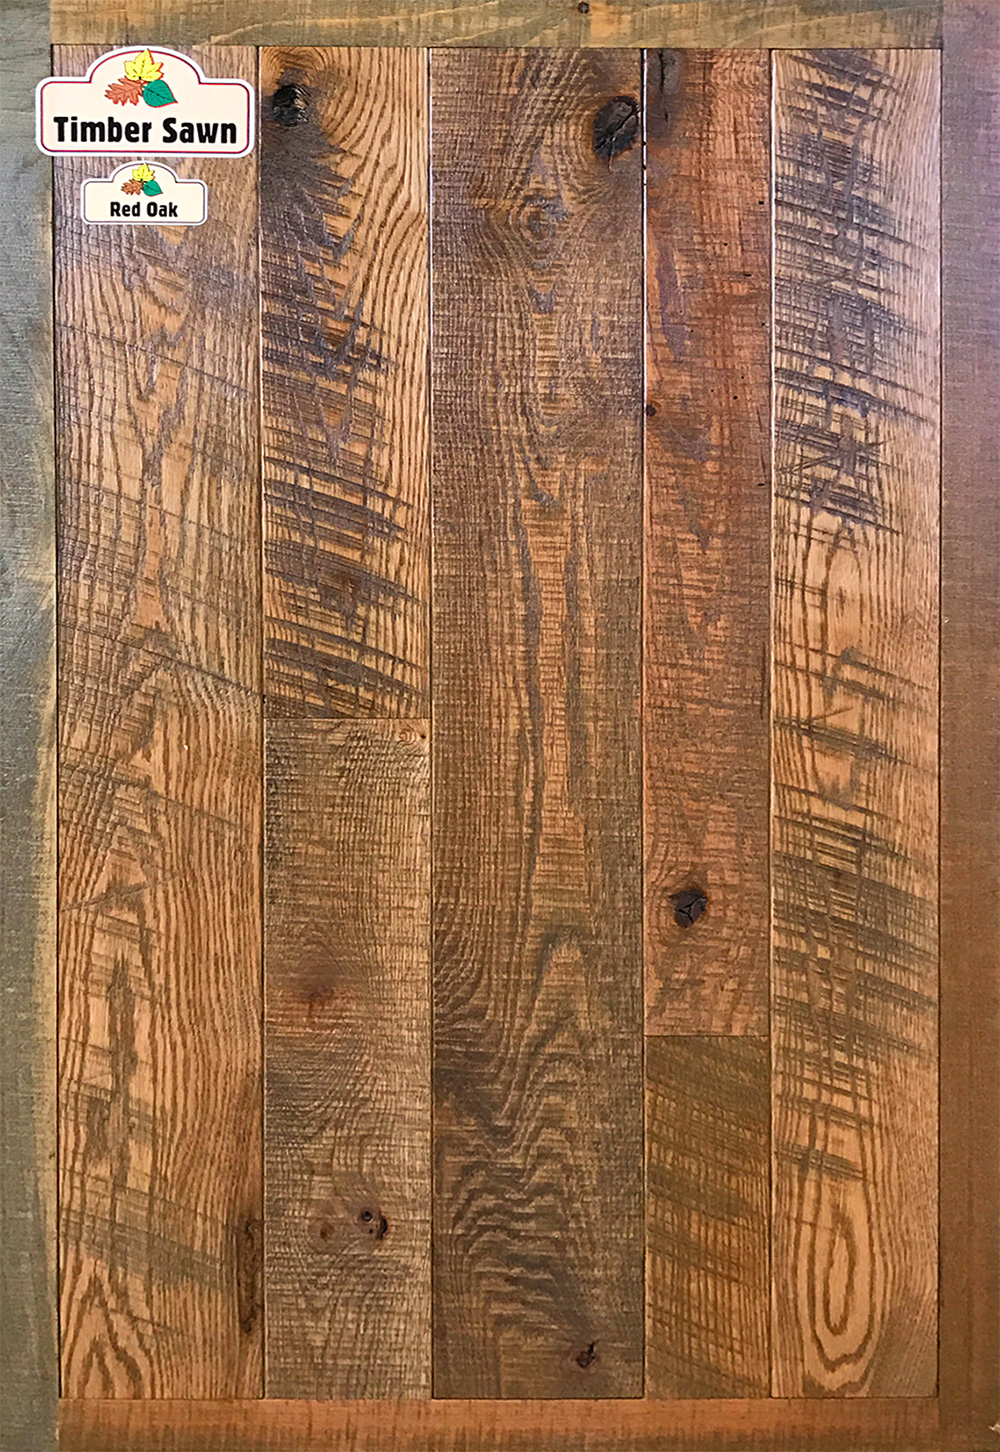 Timber Sawn Red Oak